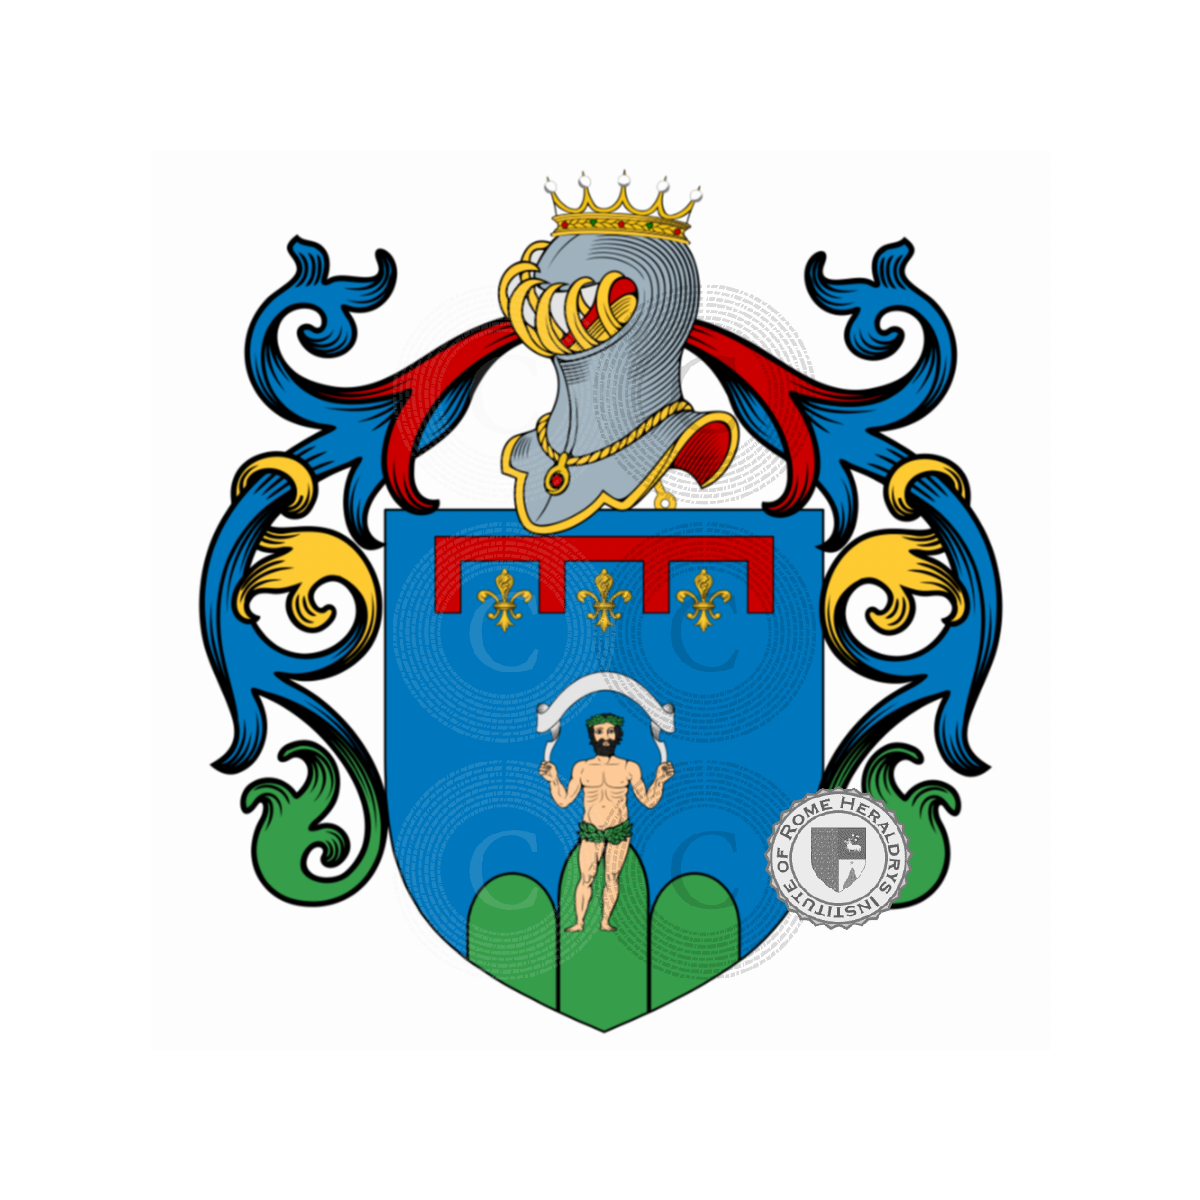 Wappen der FamilieTomasi, Tomasi di Lampedusa,Tomasi di Sciacca,Tommasi